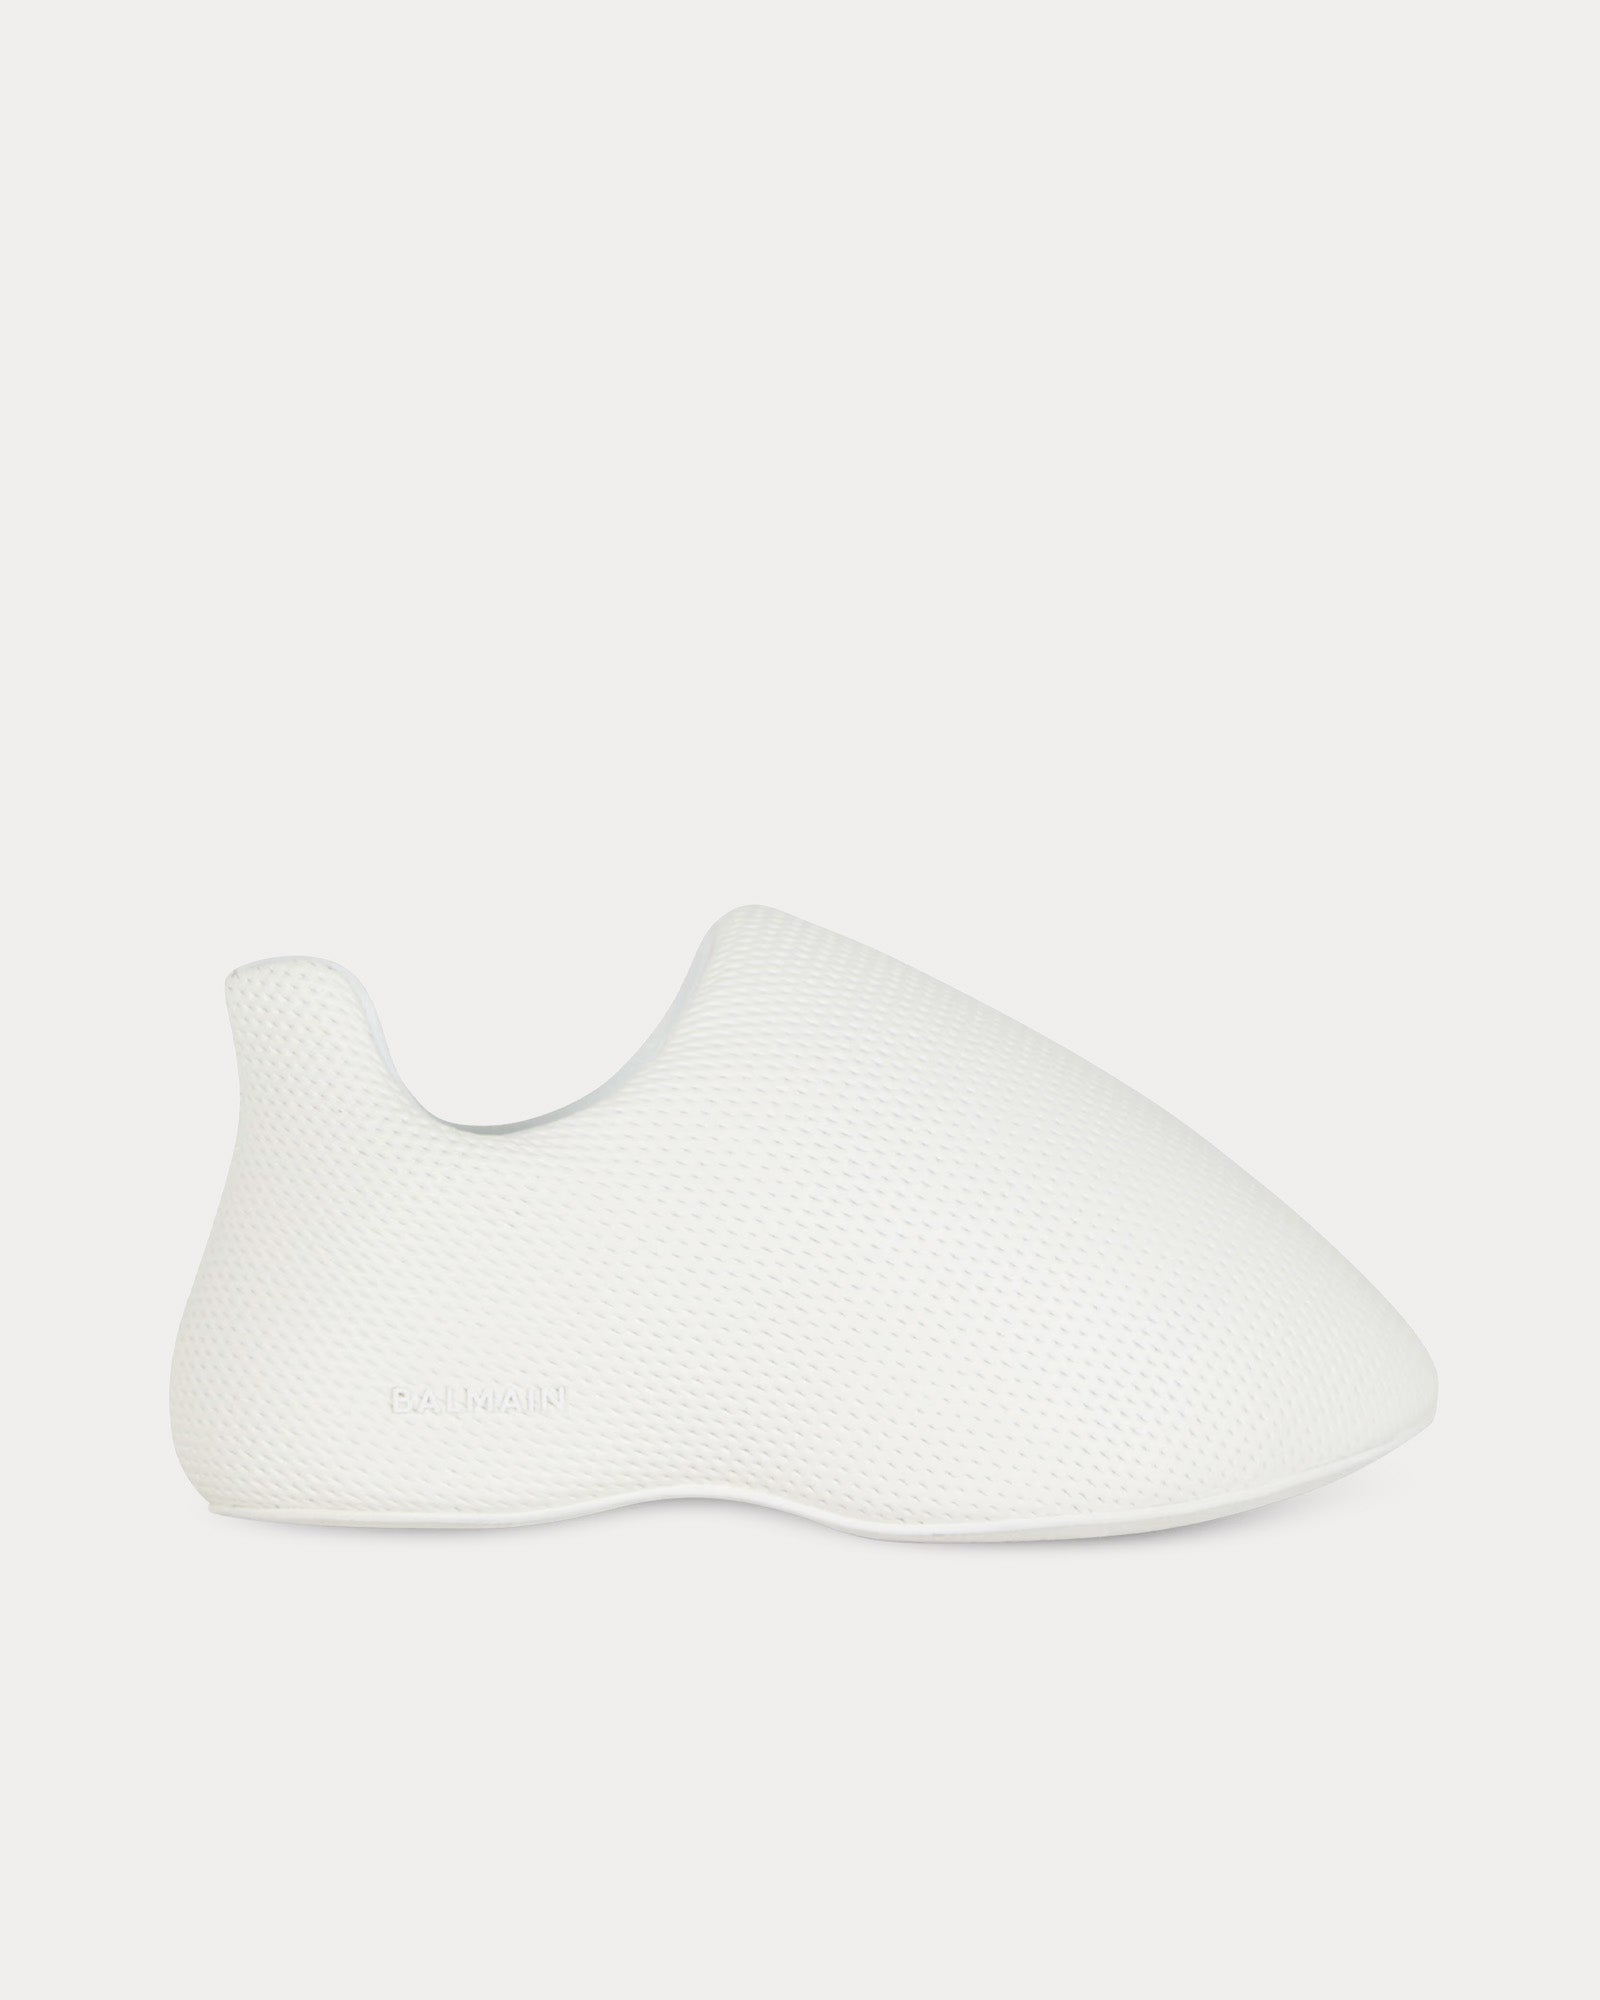 Balmain - B-Cloud Embossed Leather White Slip On Sneakers